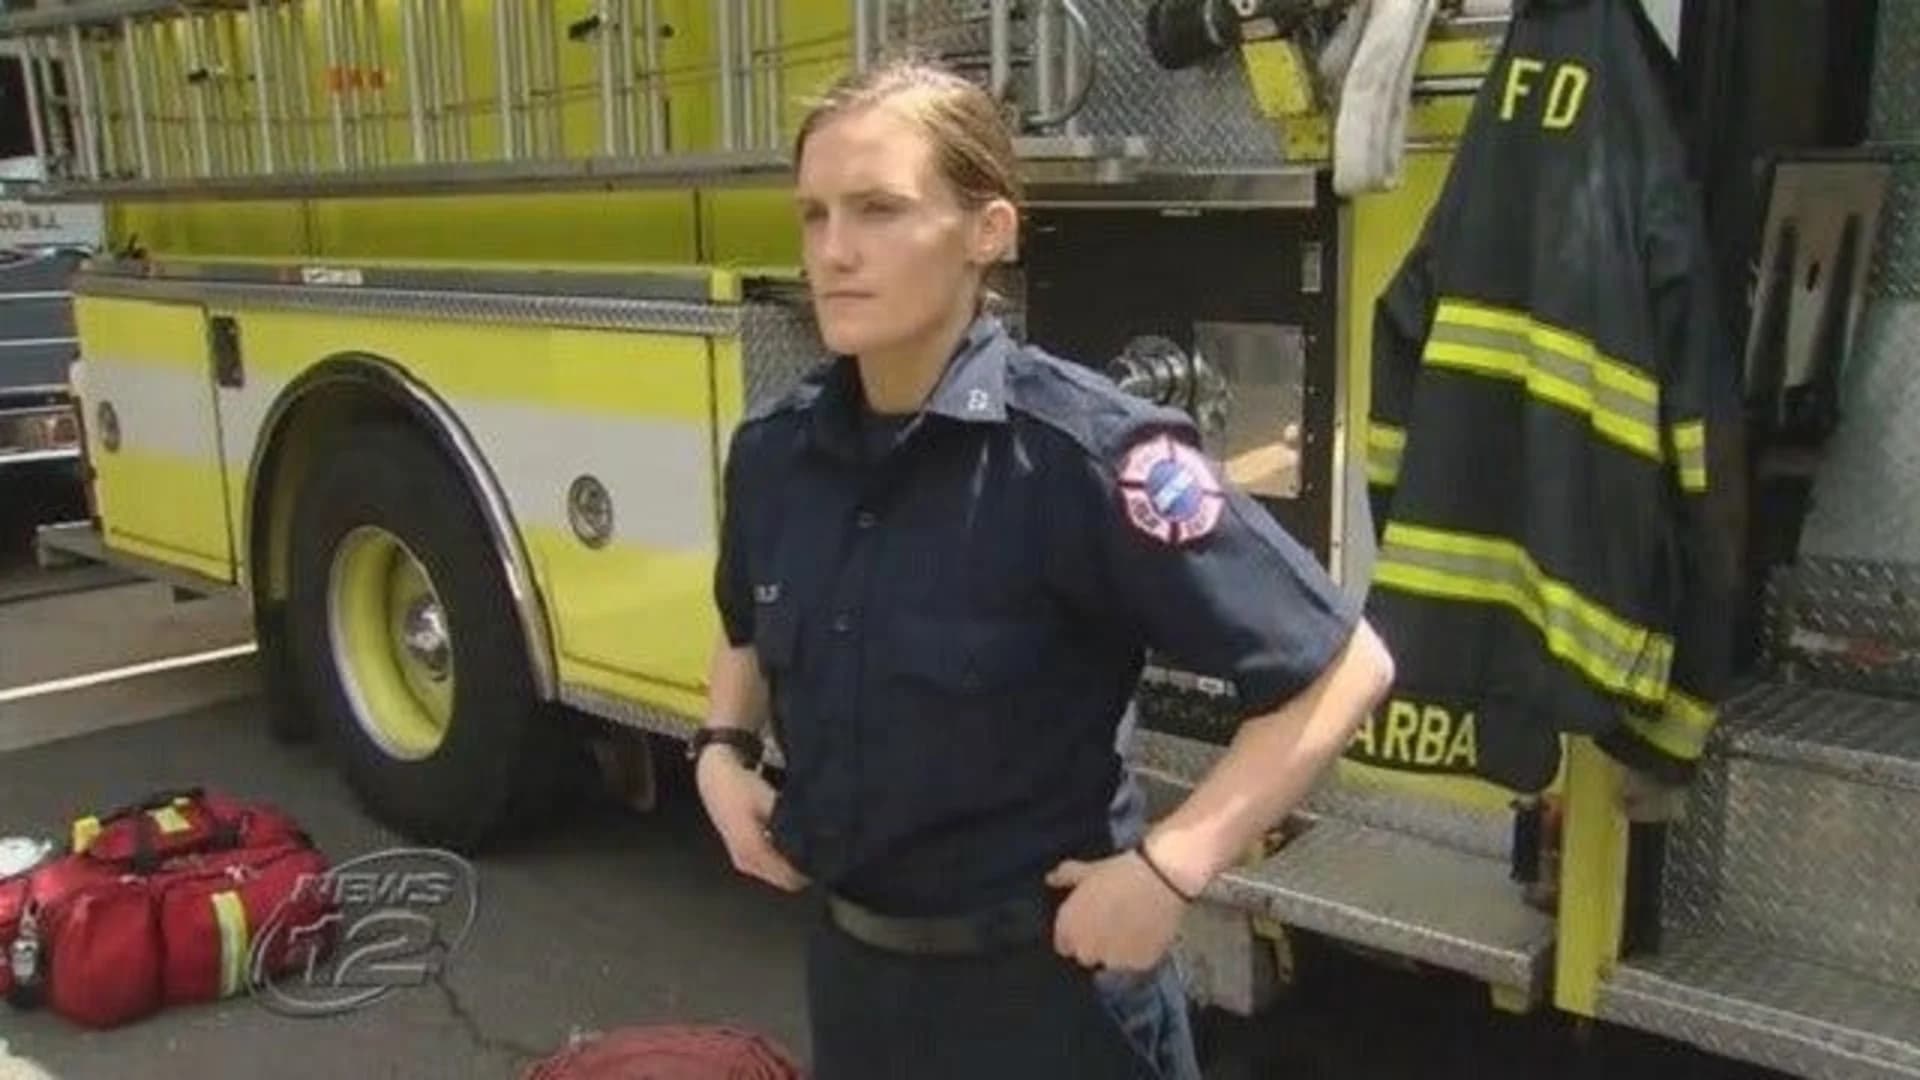 Ridgewood’s 1st career woman firefighter to be sworn in